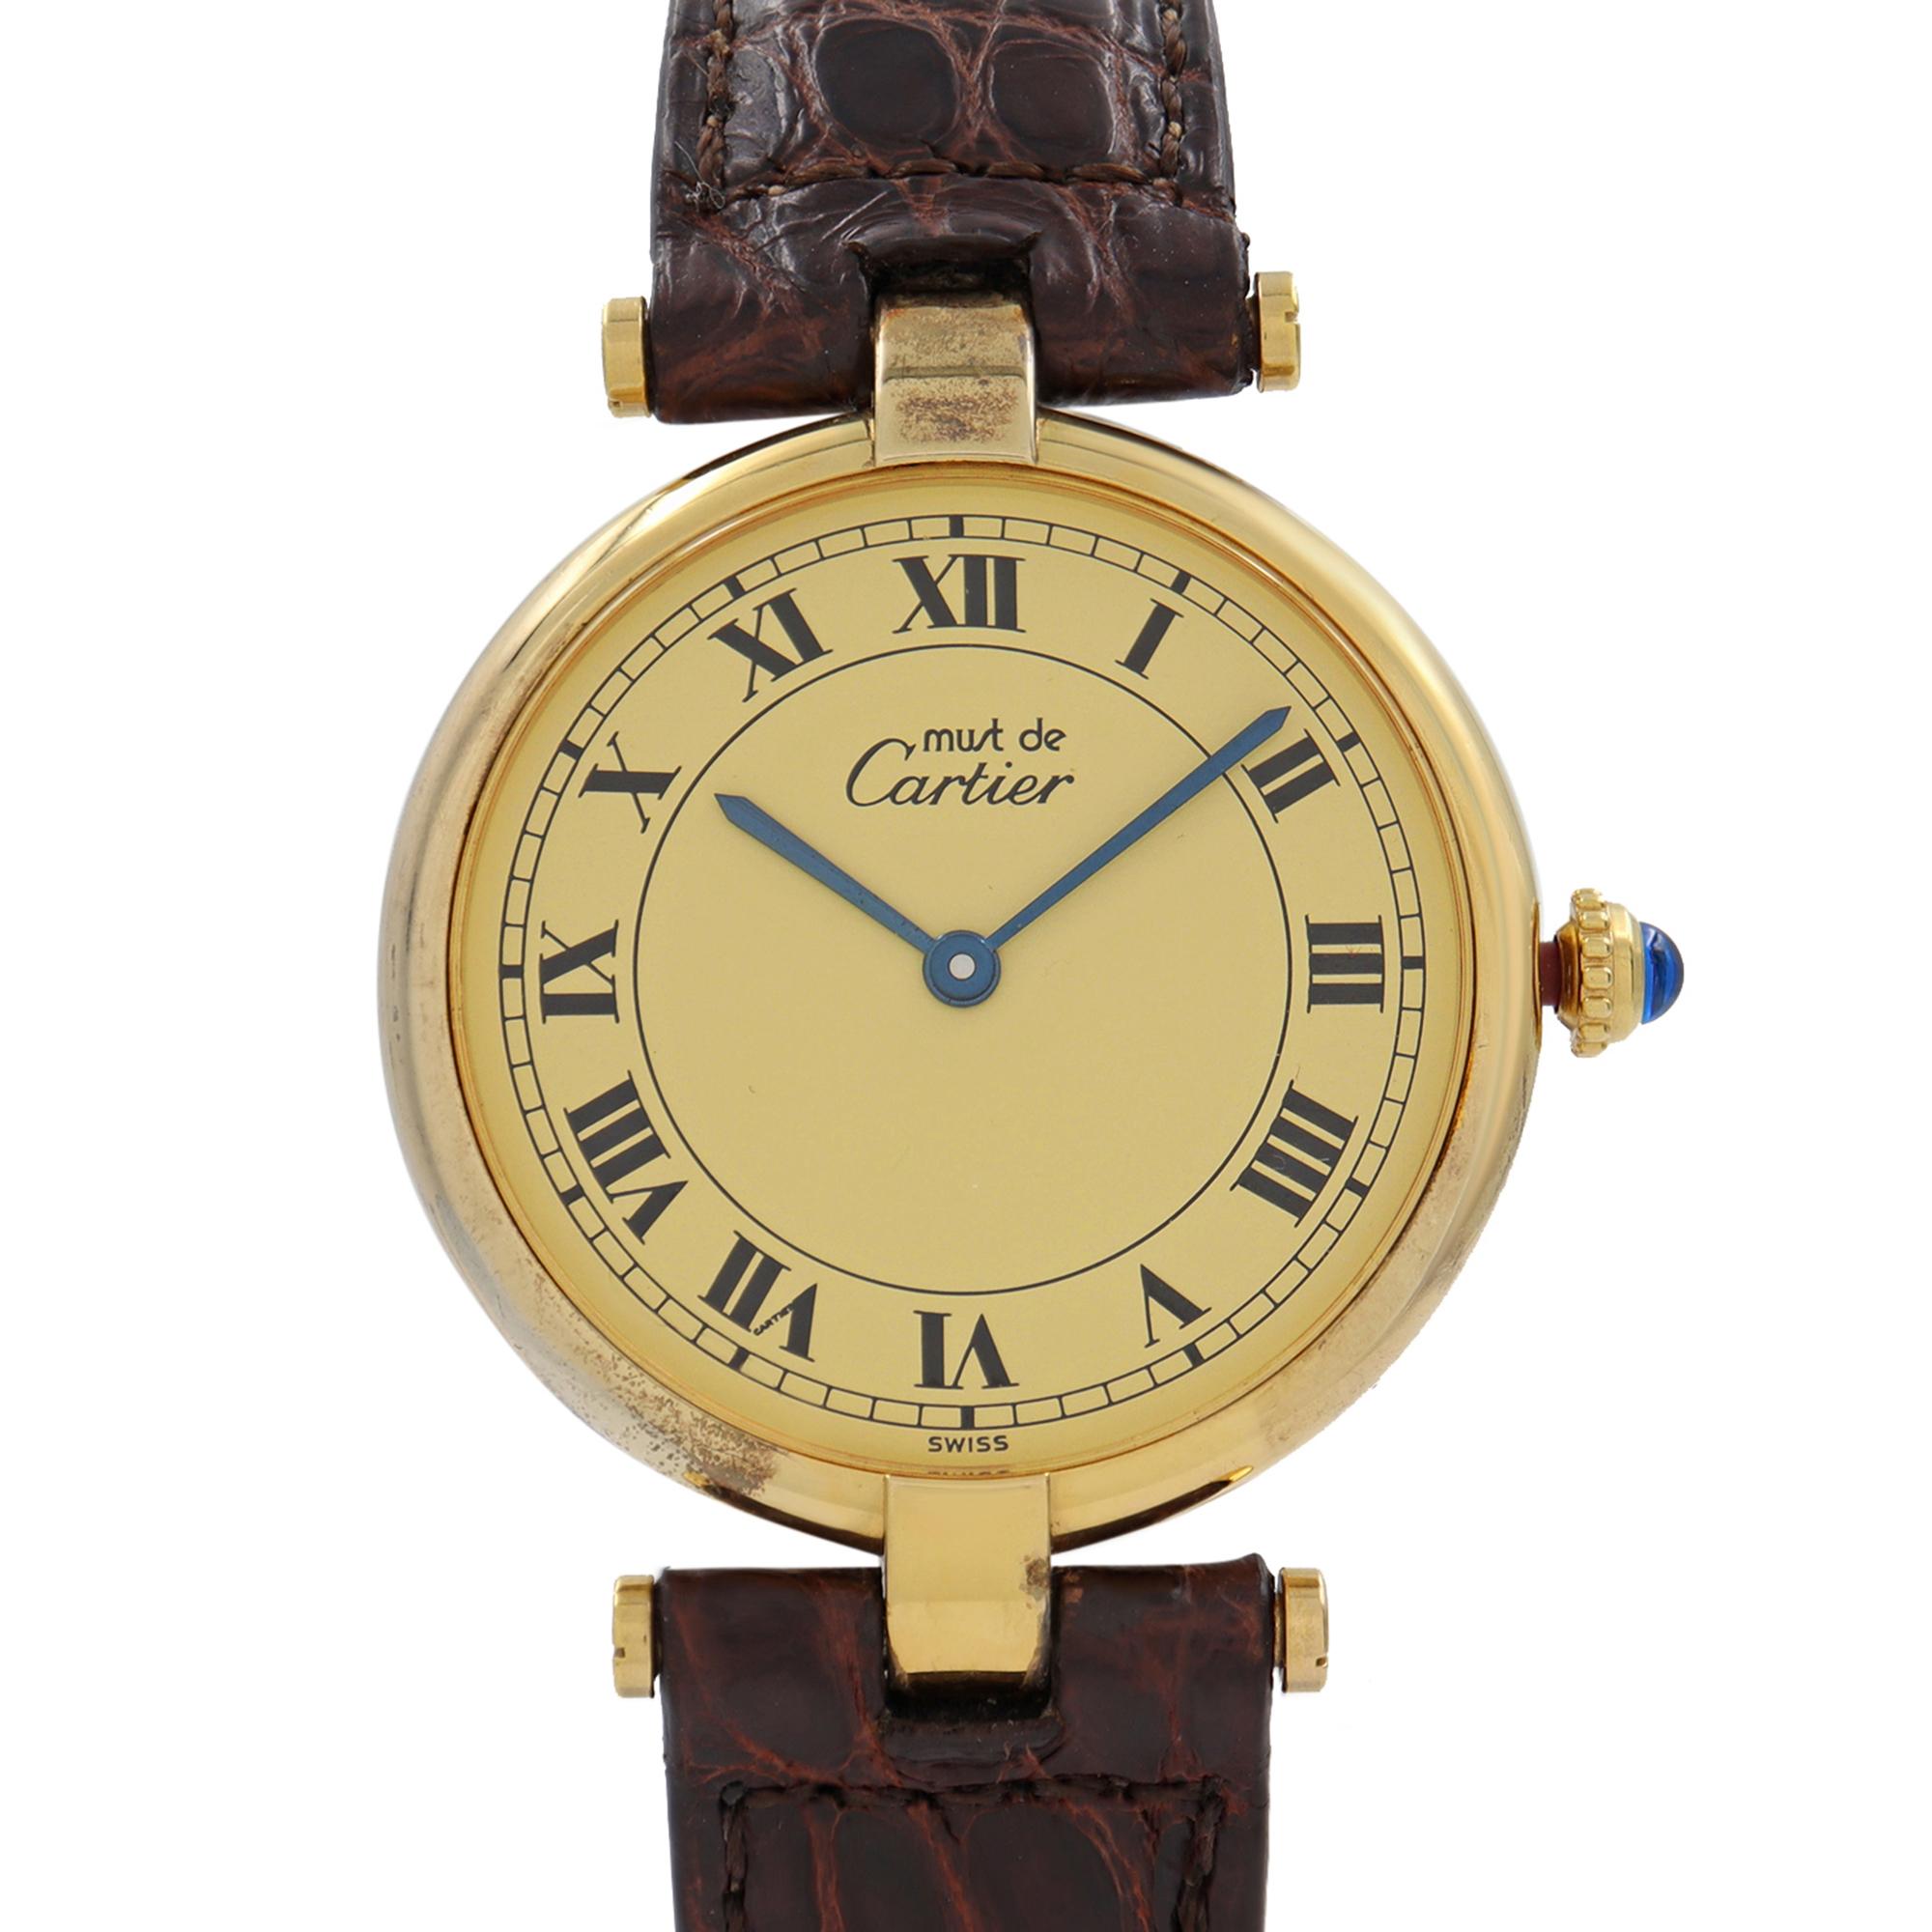 Cartier Quartz 925 Argent Watch - 2 For Sale on 1stDibs | cartier quartz  argent watch, cartier 925 argent watch price, cartier argent 925 watch